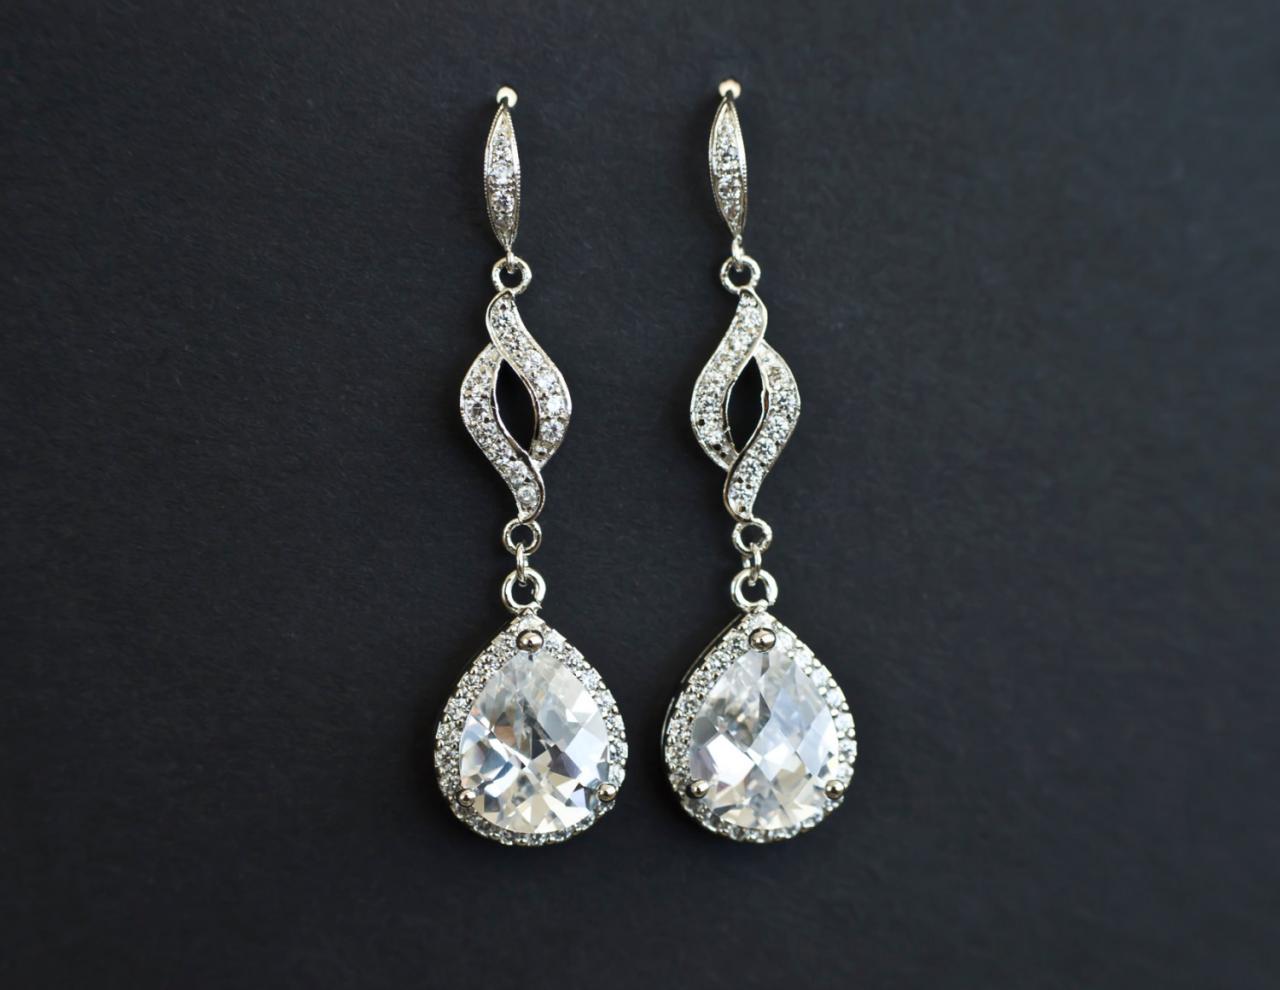 Bridal Earrings, Cubic Zirconia Bridal Earrings, Long Dangle Bridal Earrings, Cz Earwires Cz Marquise Connectors And Large Crystal Teardrops